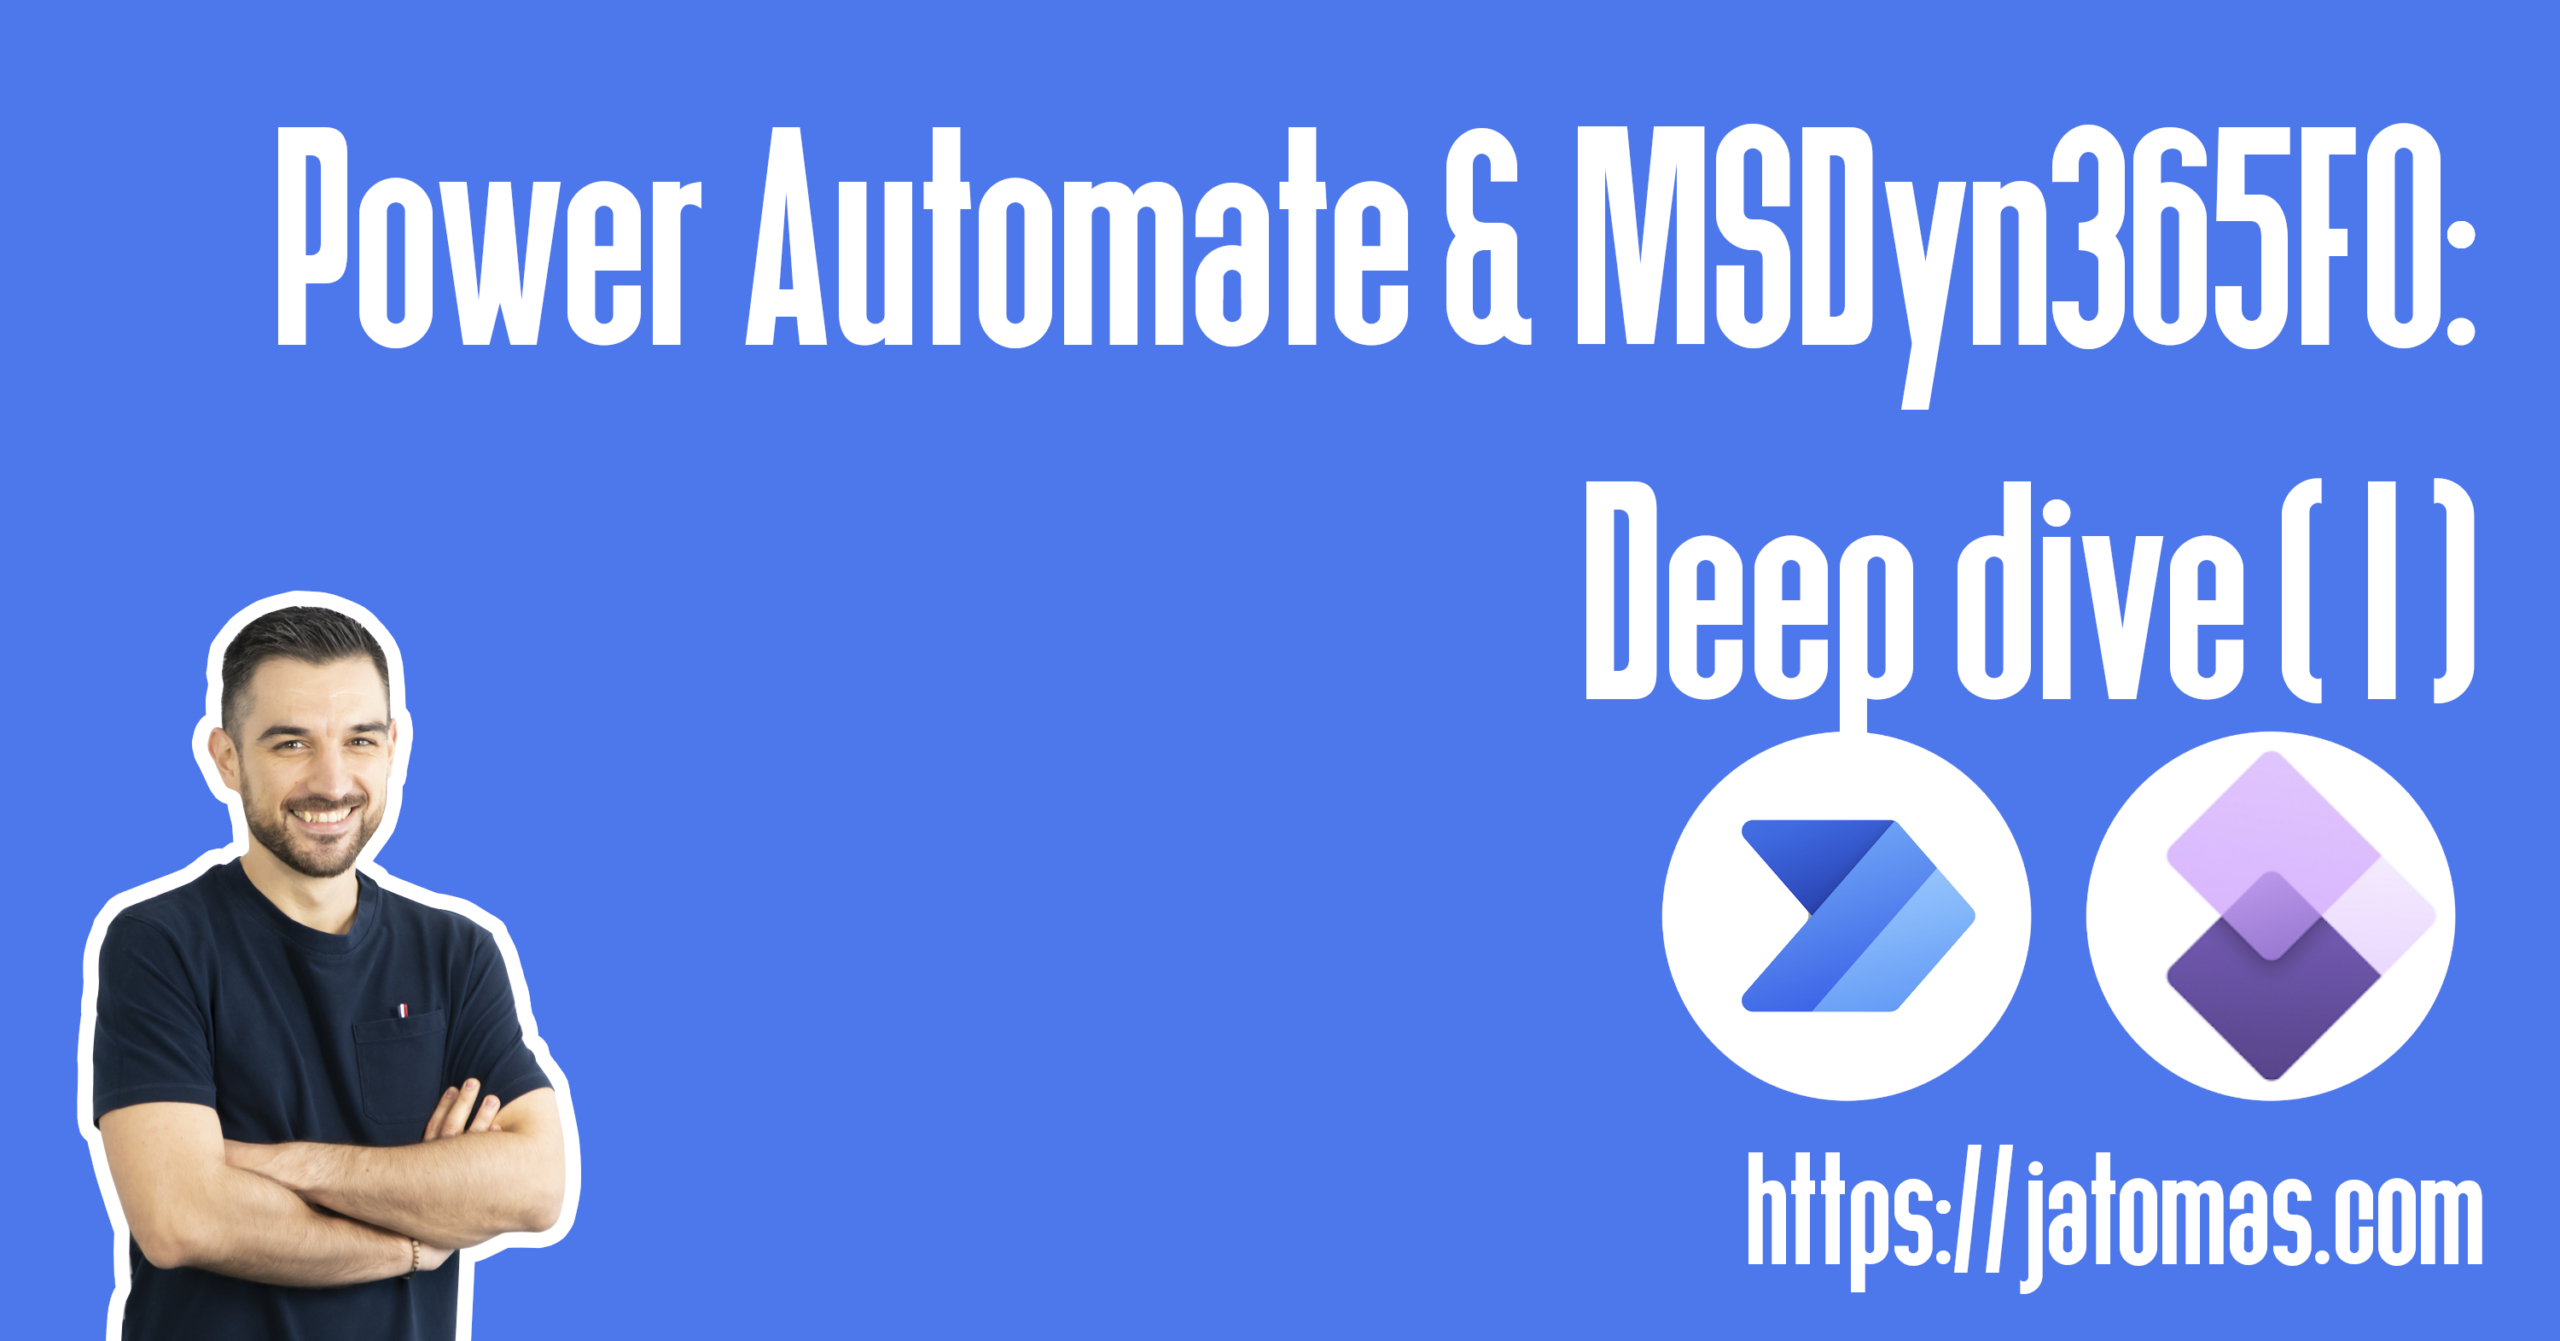 Power Automate & MSDyn365FO: Deep dive (I)